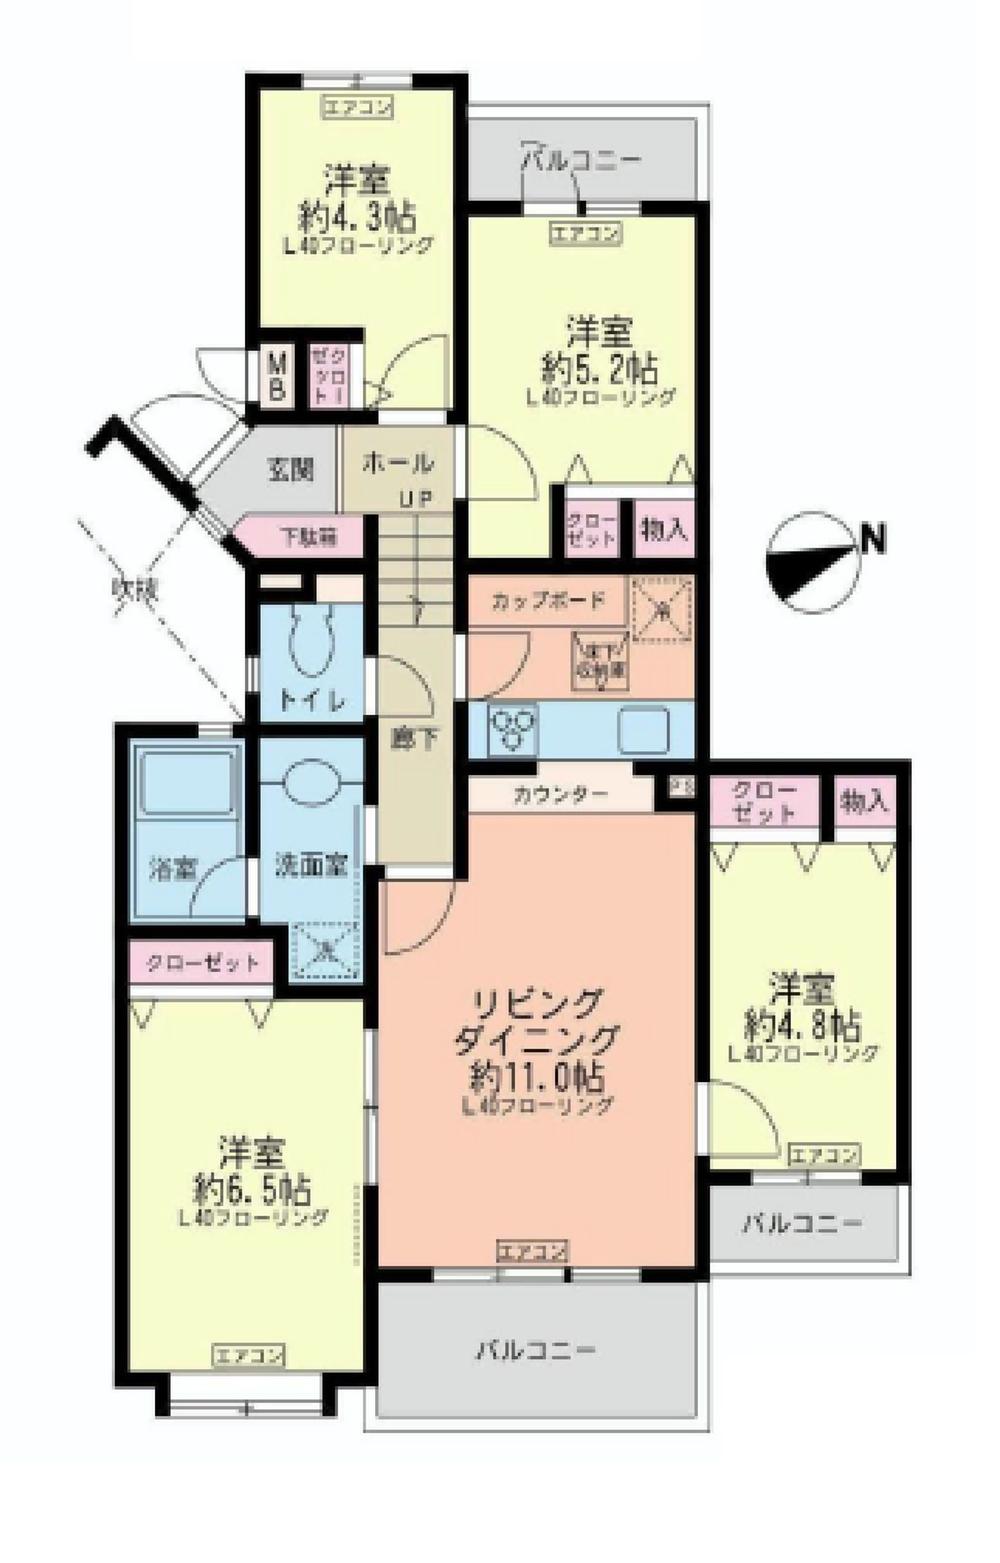 Floor plan. 4LDK, Price 15.8 million yen, Occupied area 73.73 sq m , Balcony area 10.21 sq m